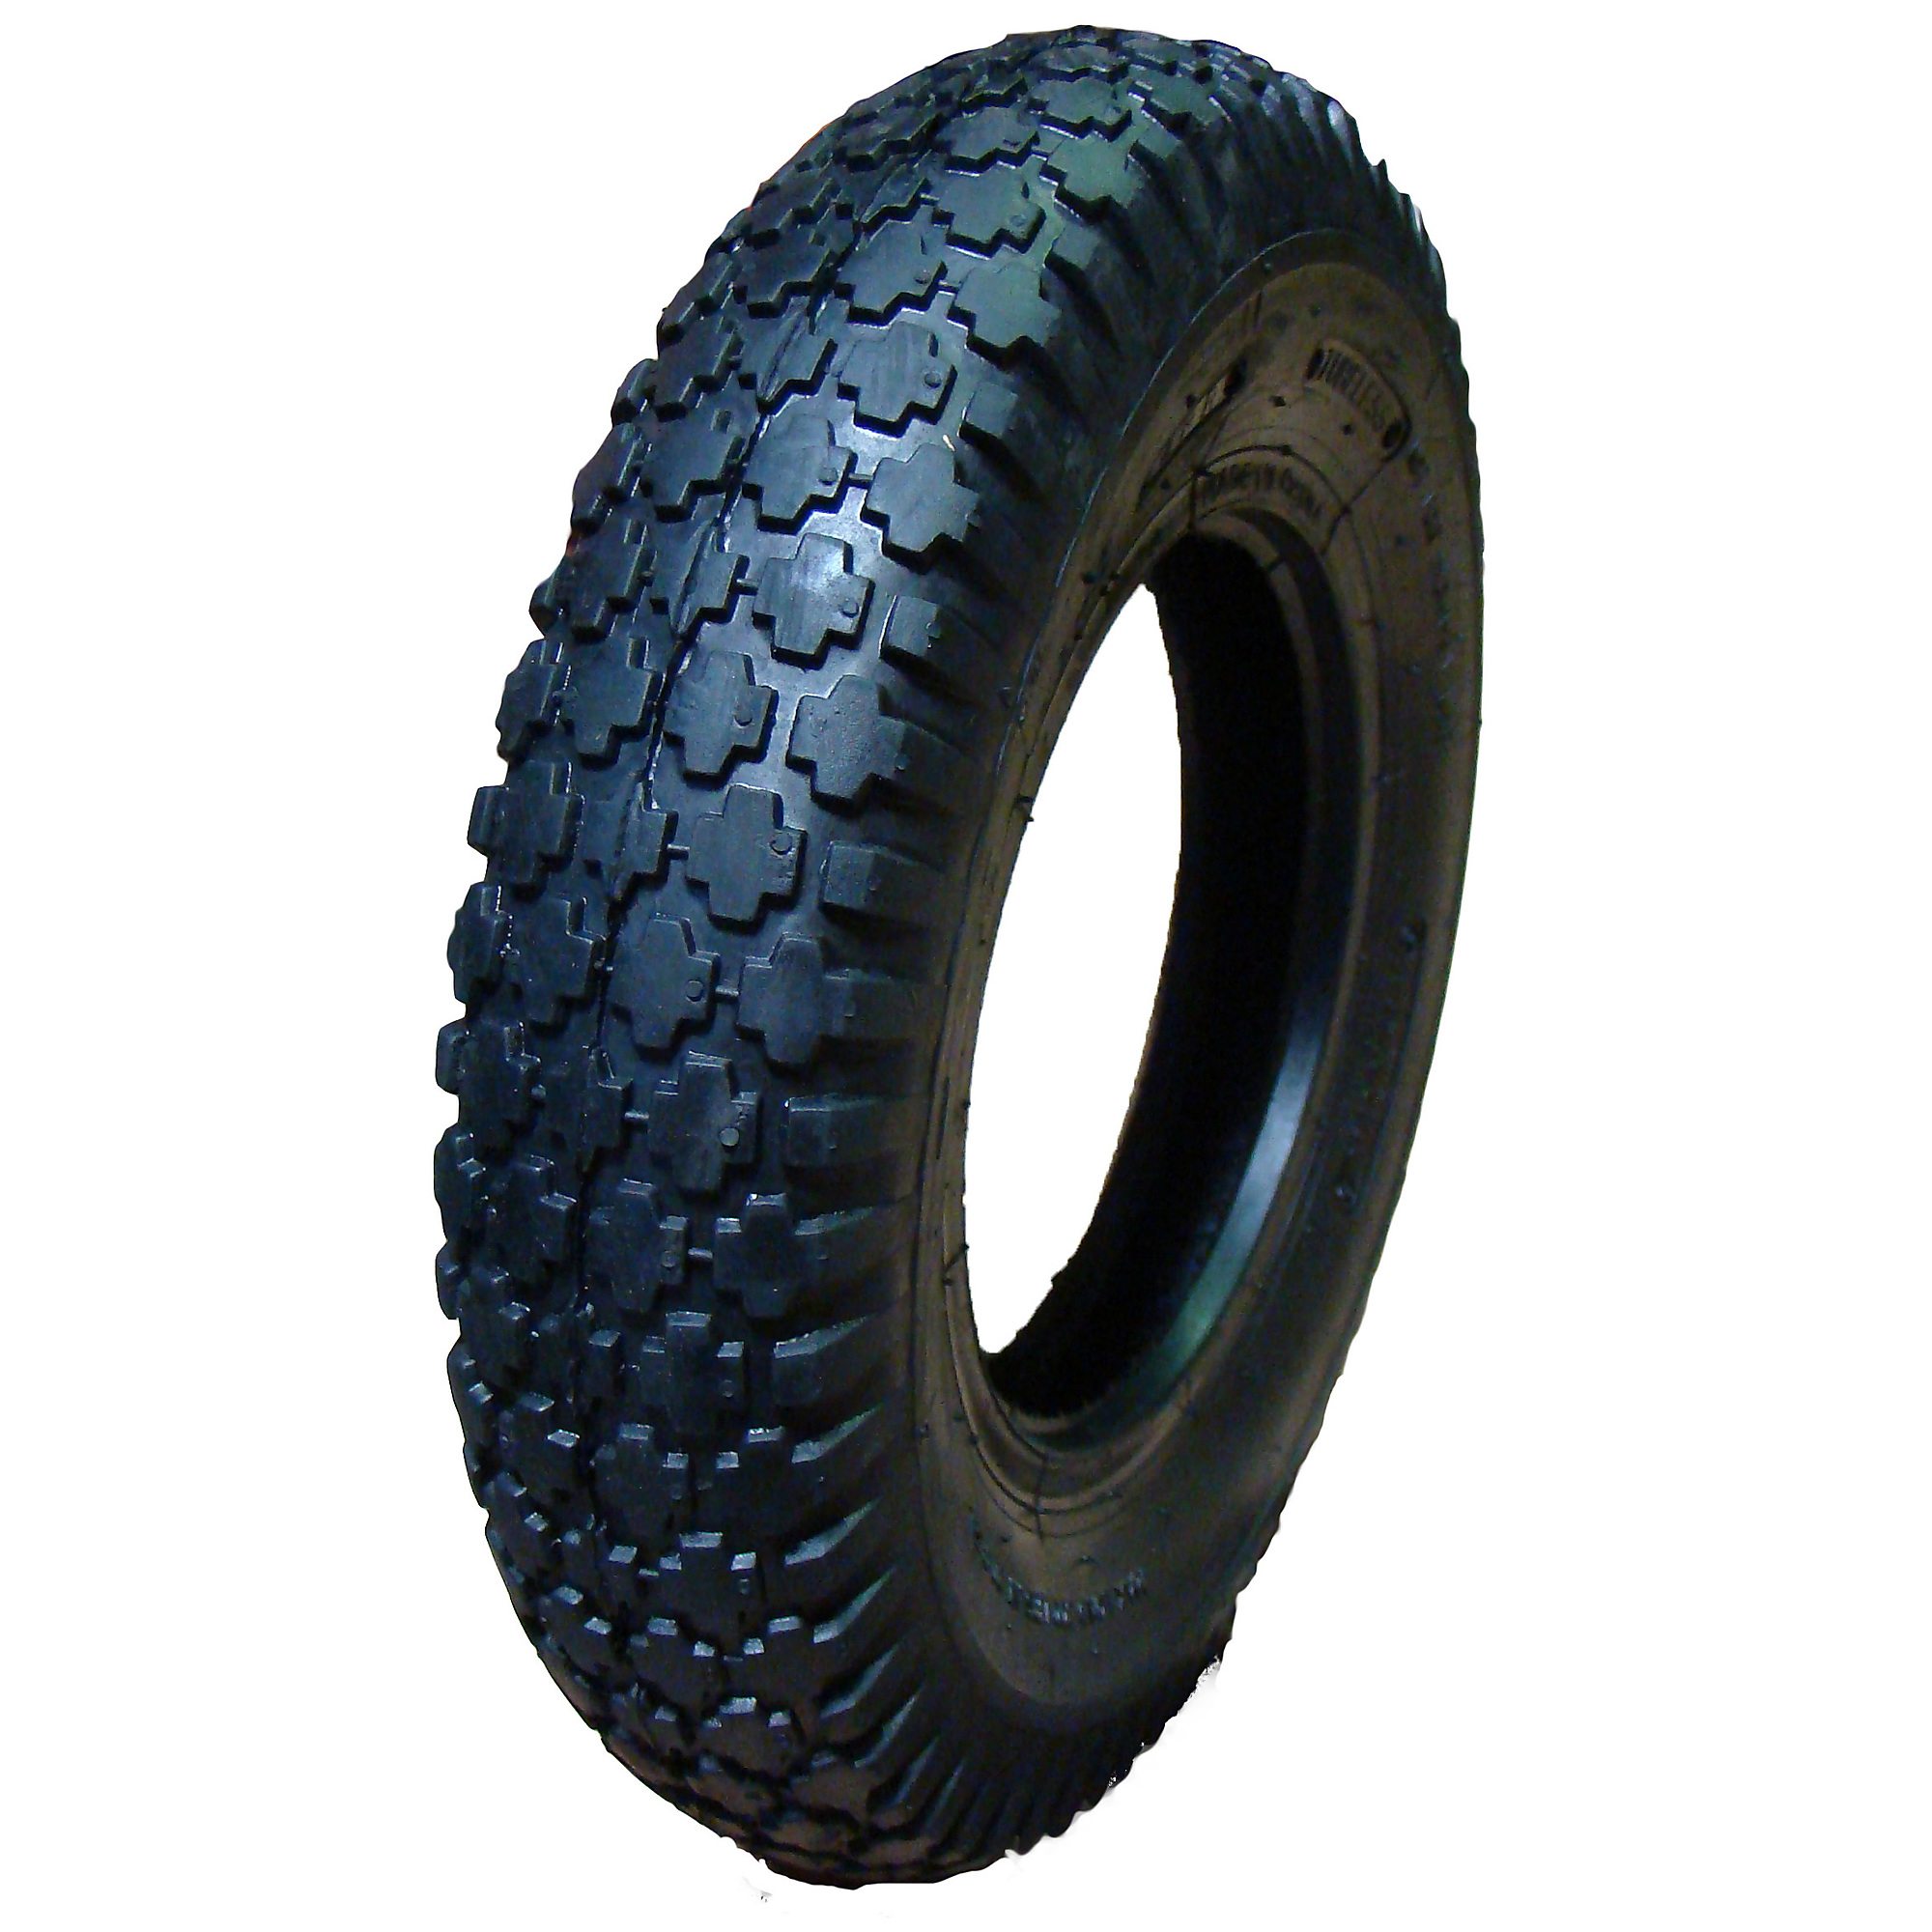 HI-RUN, Wheel Barrow Tire, 4 ply, Stud, Tire Size 4.80/4.00-8